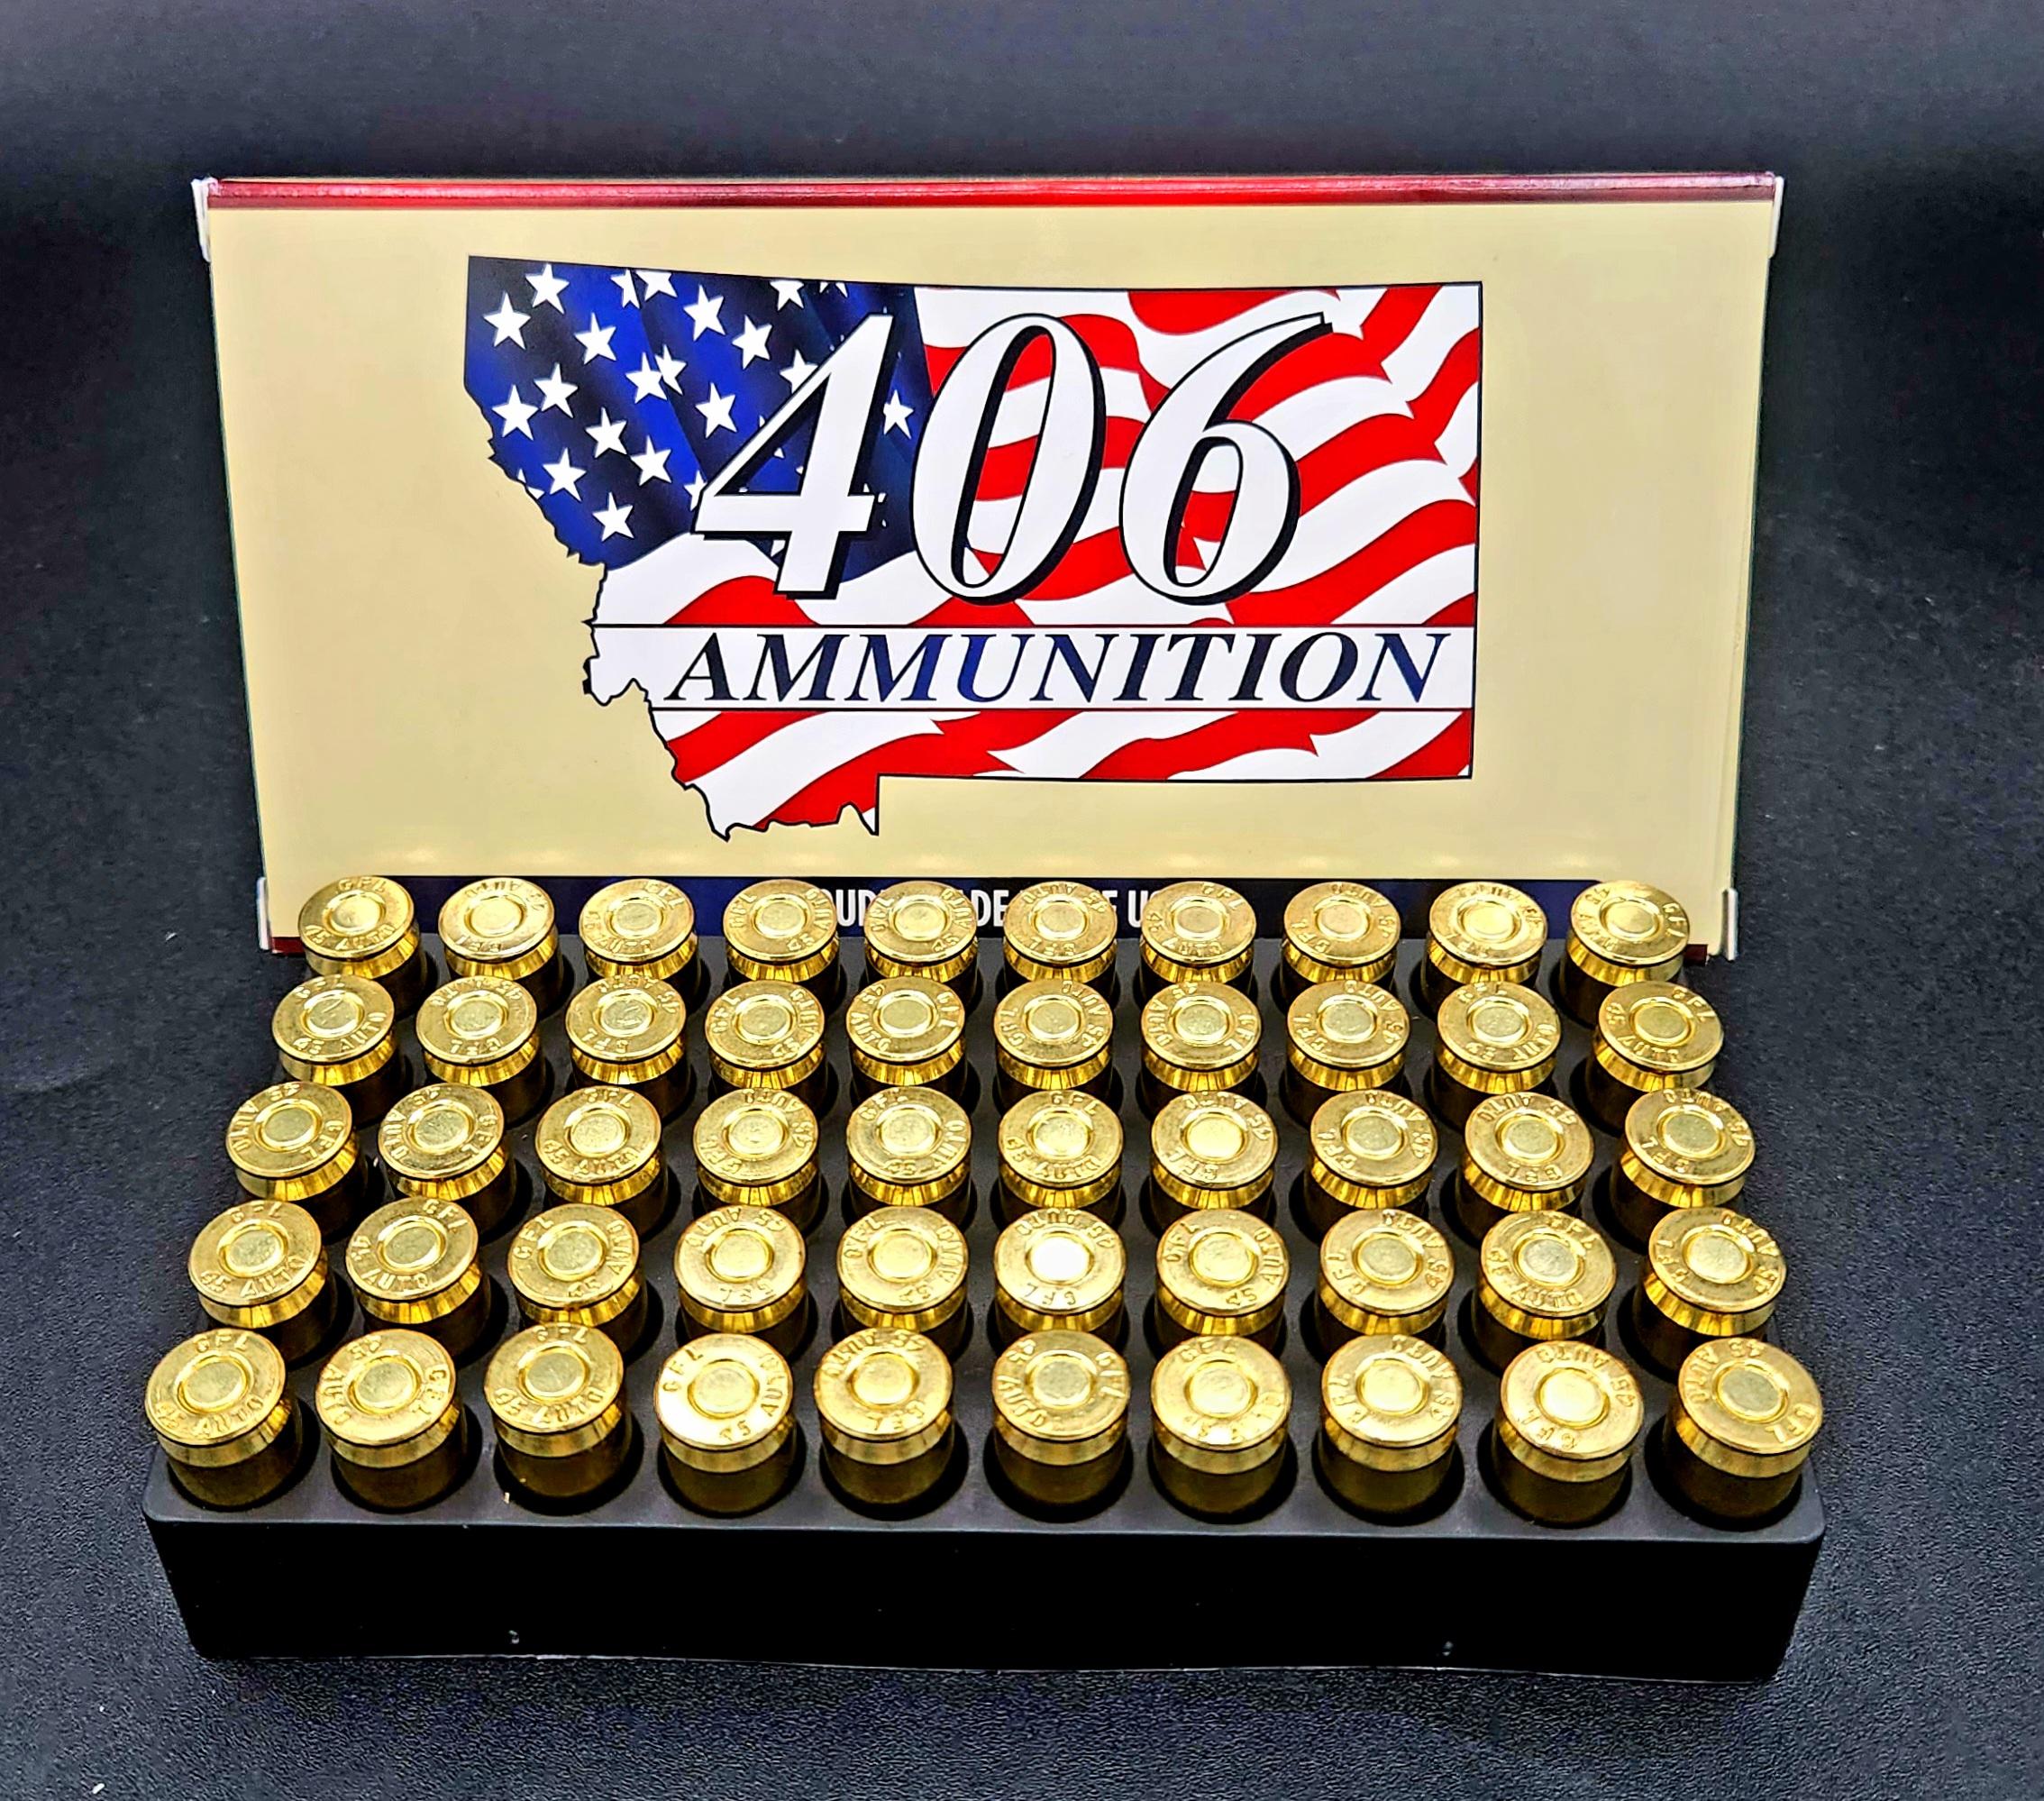 Hand Gun Ammunition 45ACP 230gr RN 406 Ammunition image 1